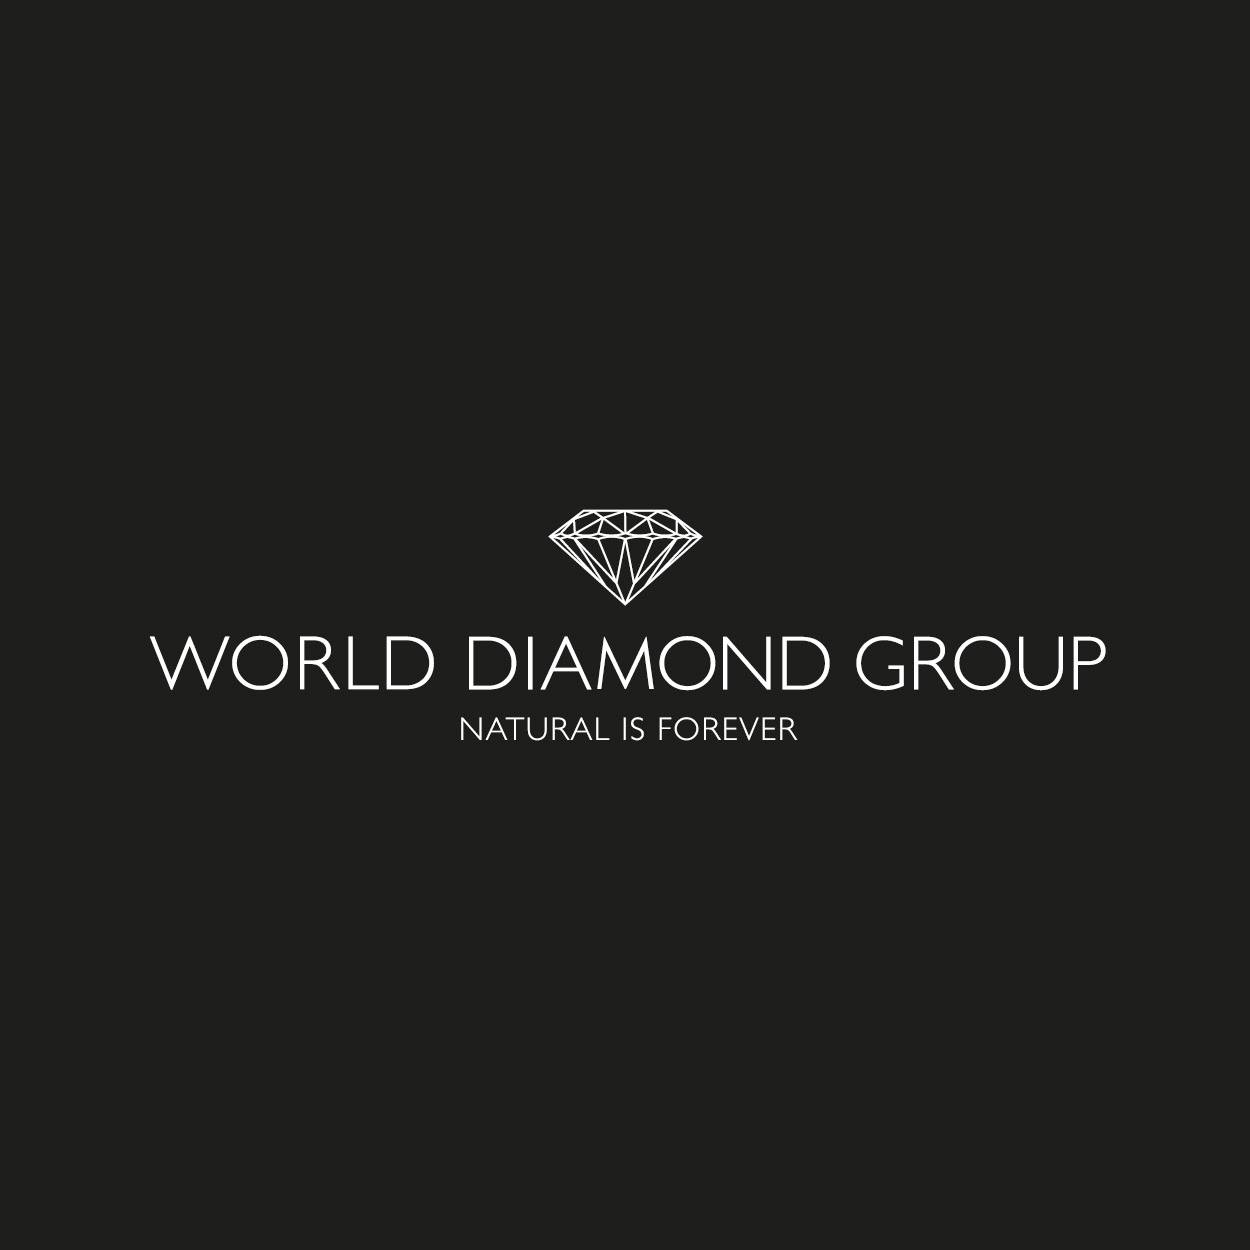 World Diamond Group